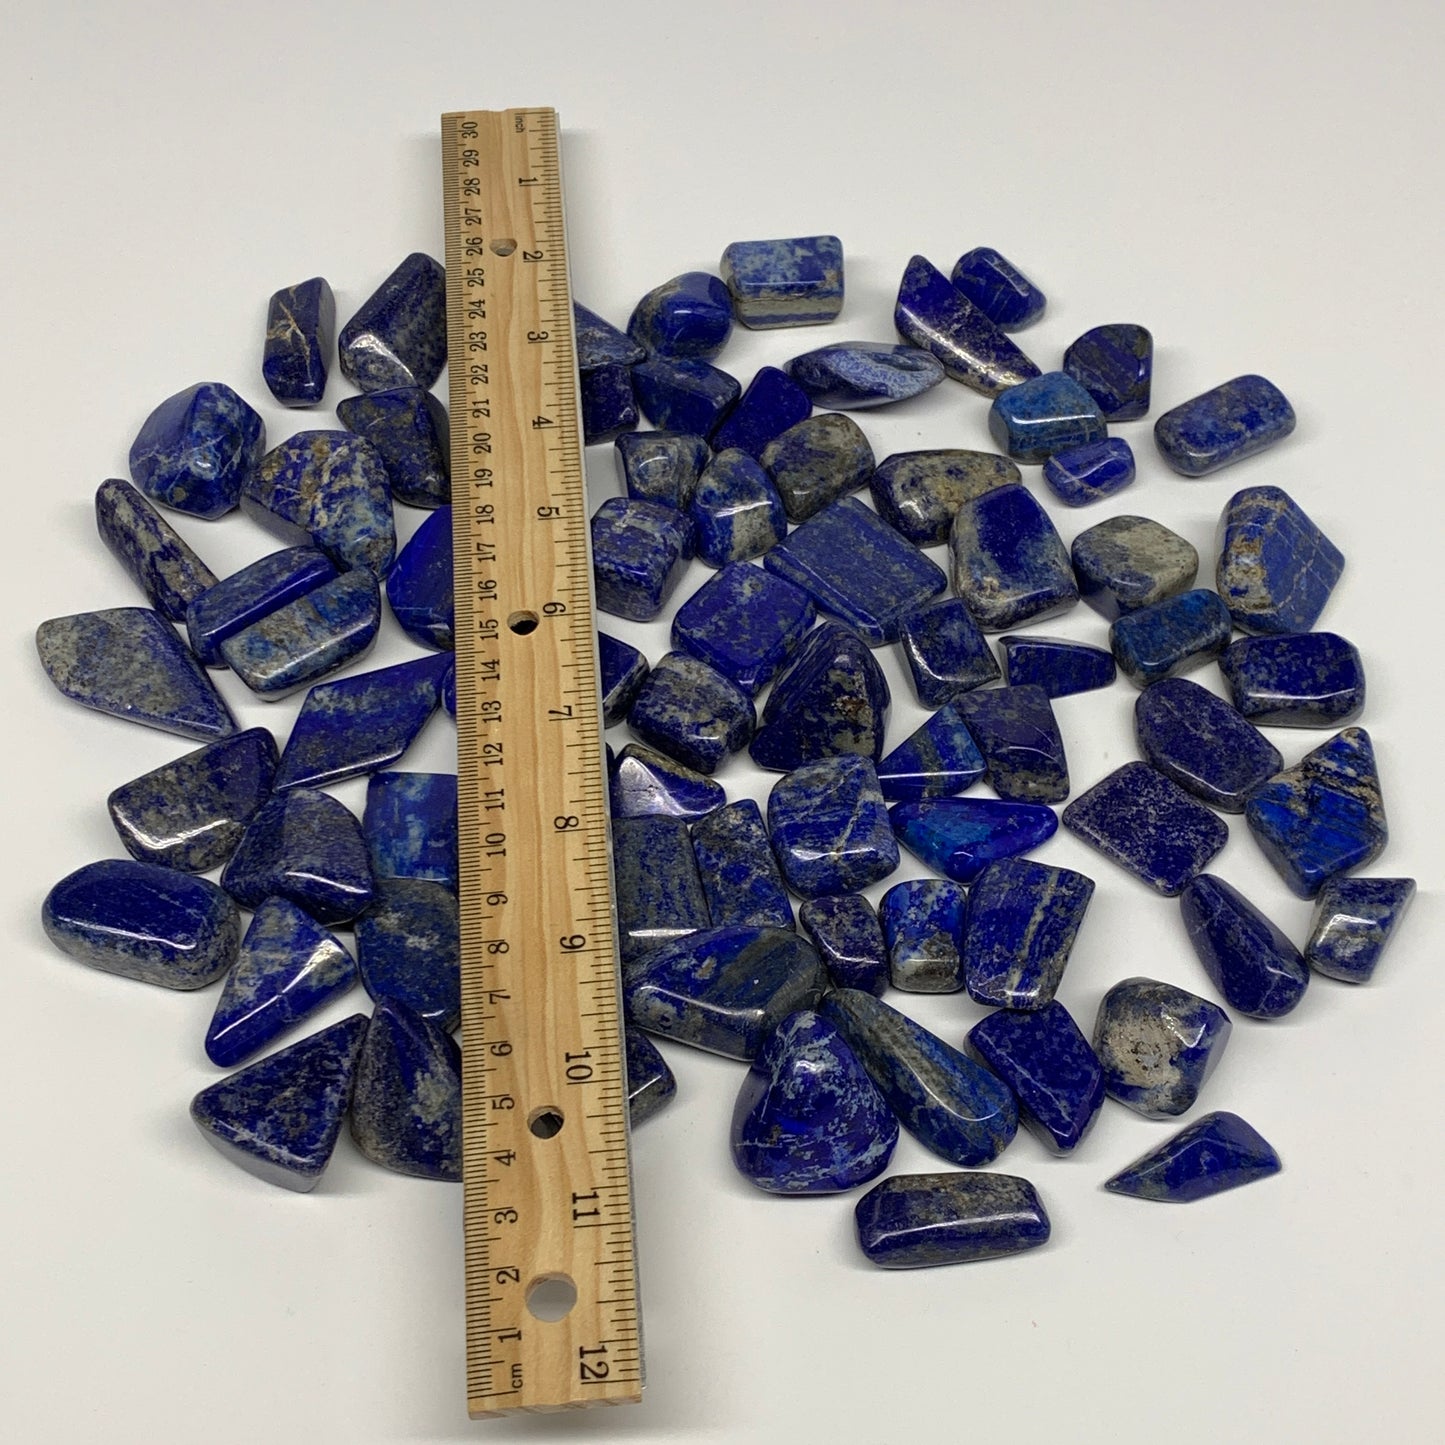 2.2 lb, 0.8"-1.9",78 pcs, Lapis Lazuli Tumbled Stone Polished @Afghanistan,B2689